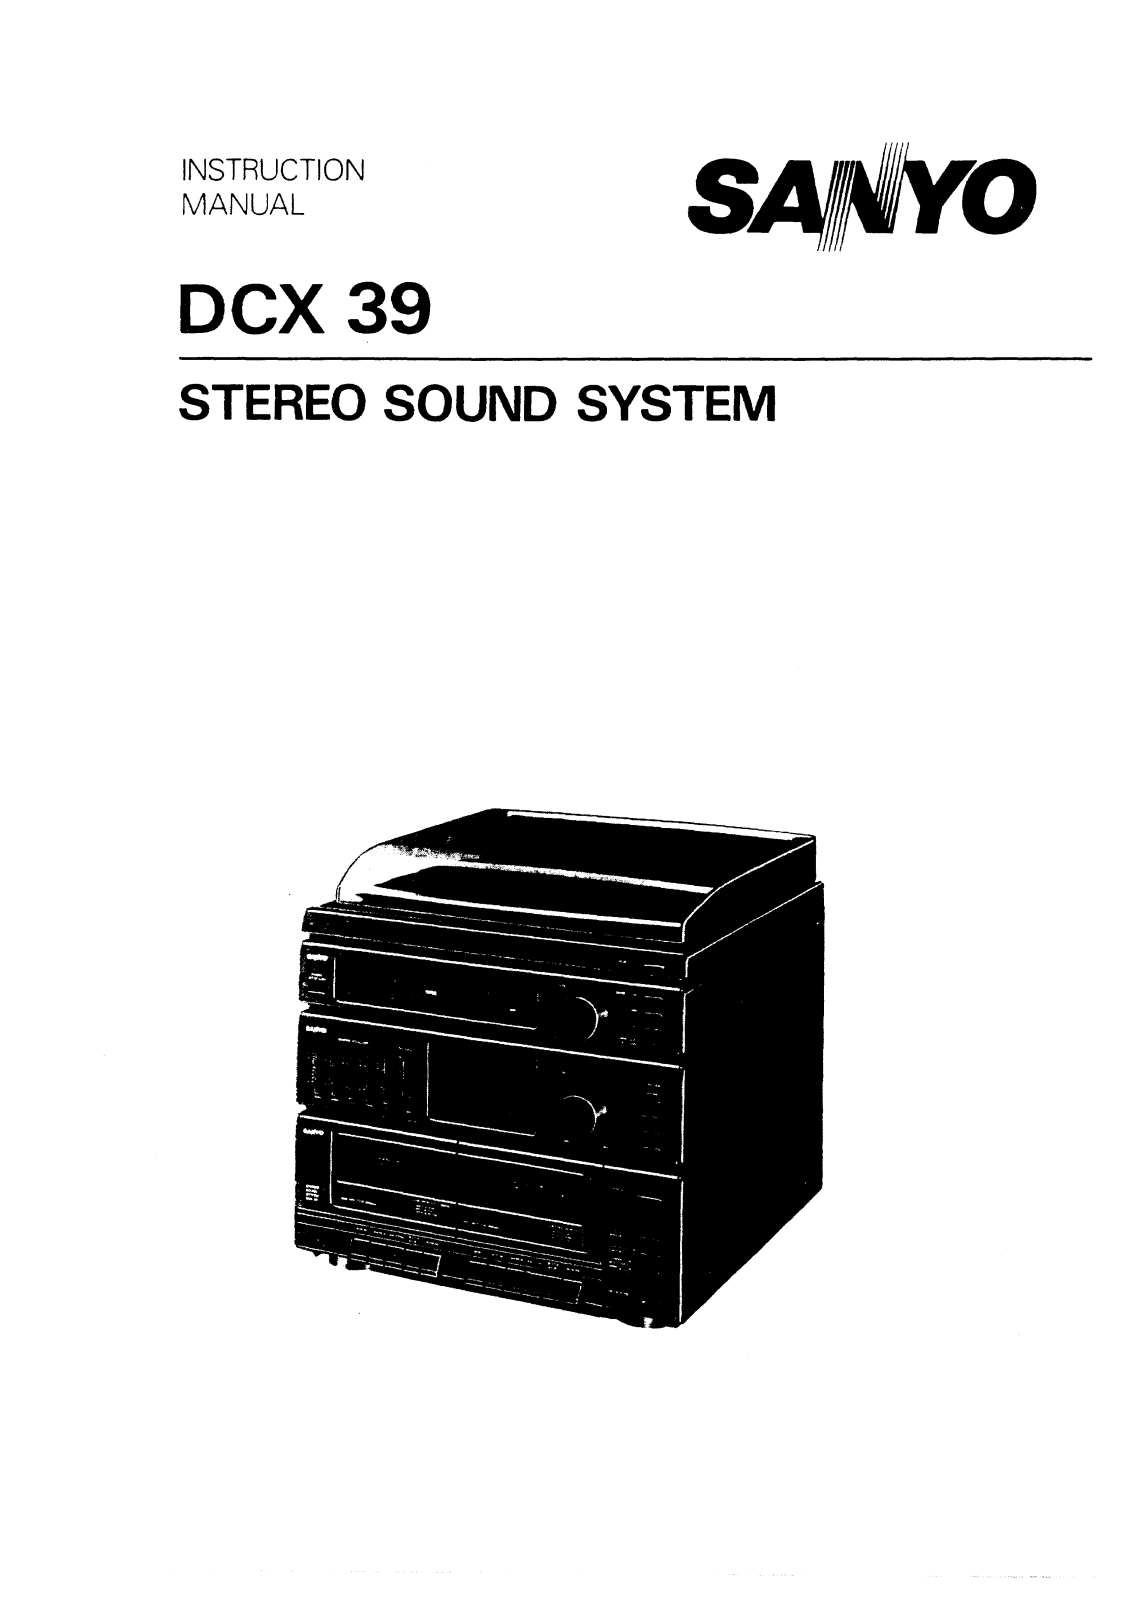 Sanyo DCX 39 Instruction Manual